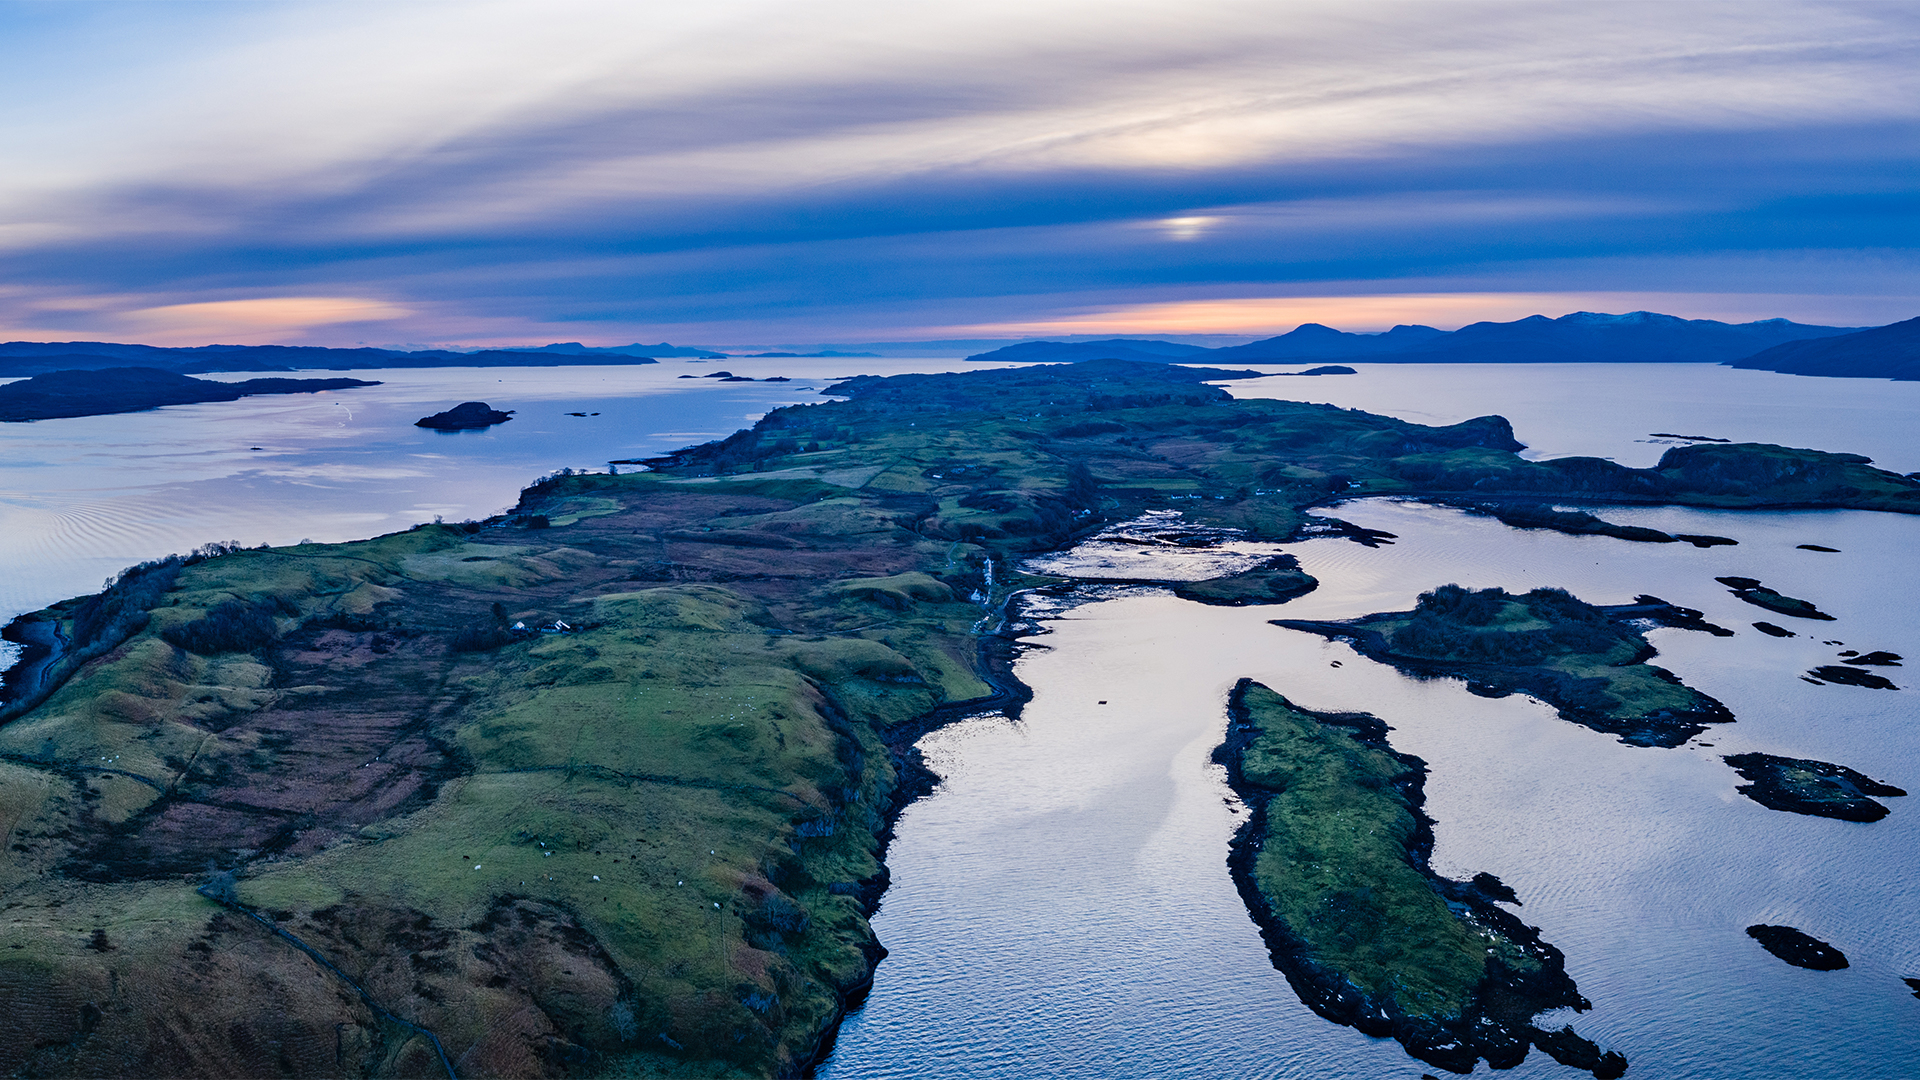 Sunrise over the Quiraing on the Isle of Skye in Scotland